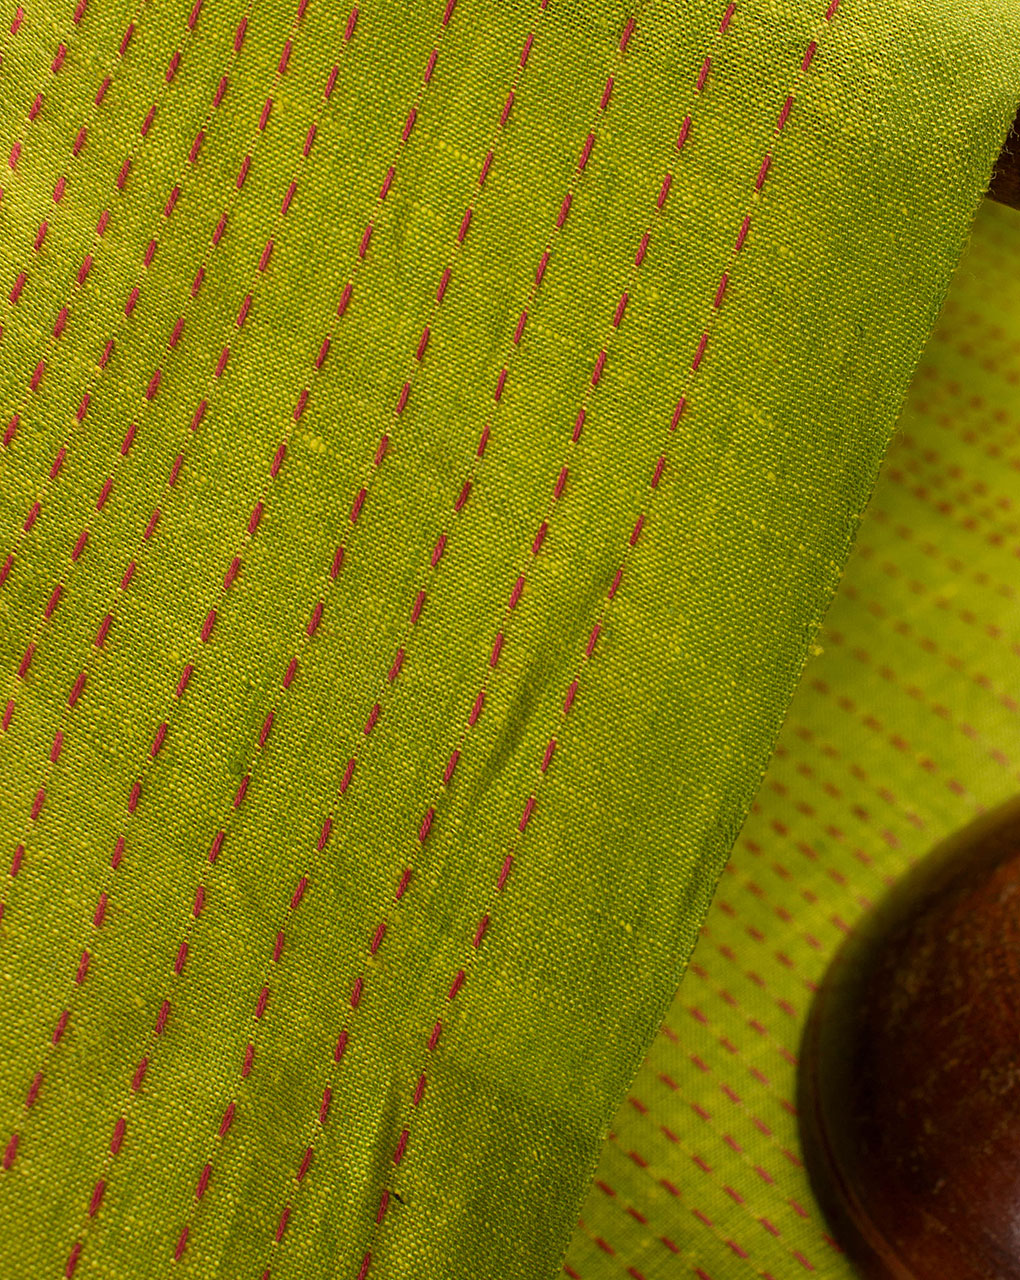 Woven Loom TextuKantha Cotton Fabric - Fabriclore.com